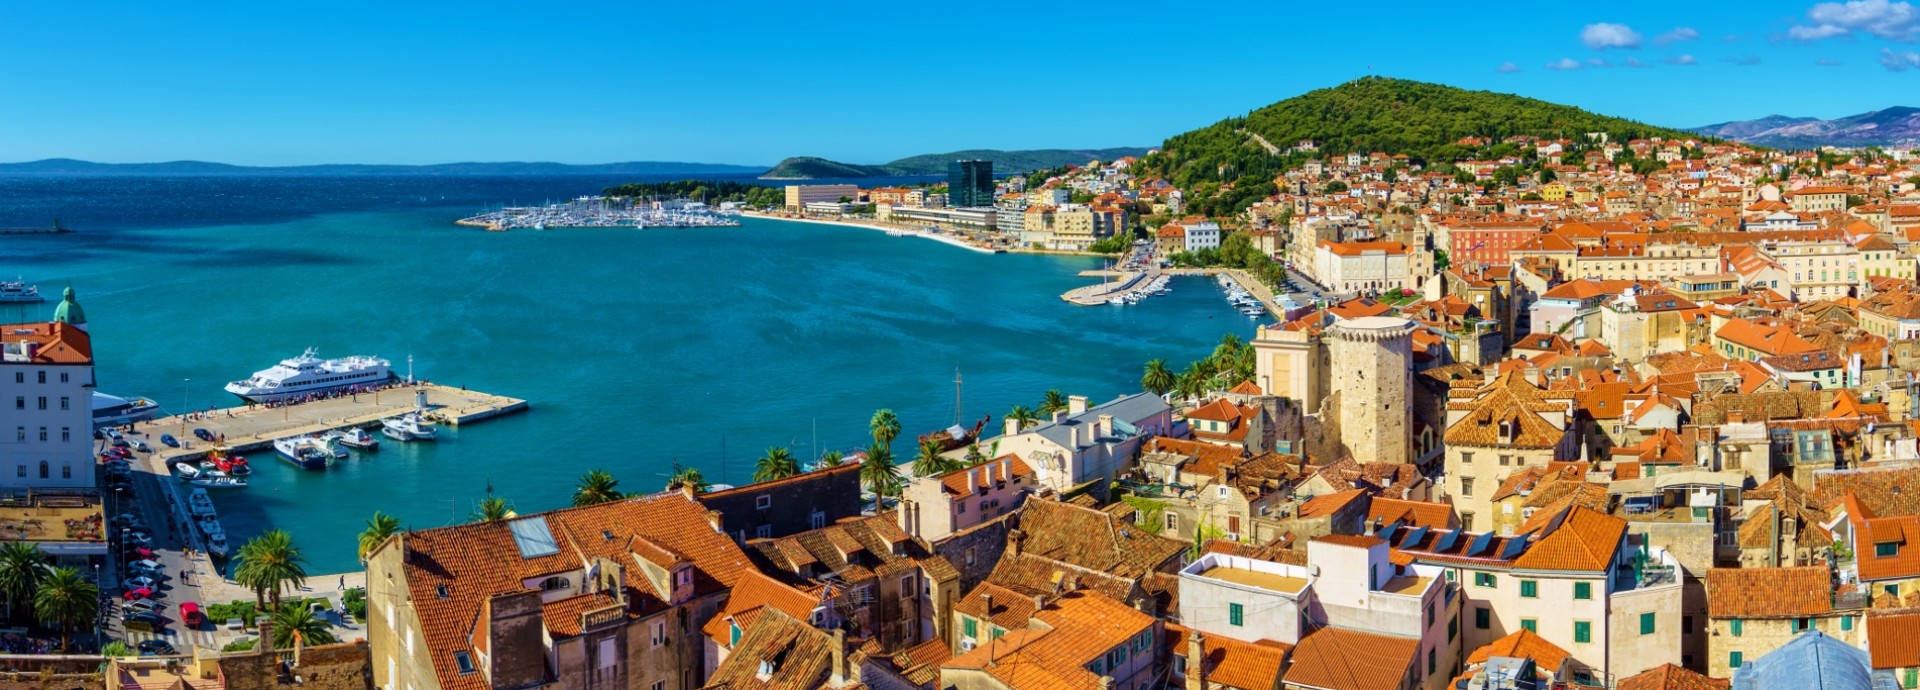 Split panorama courtesy of the Croatian National Tourist Board